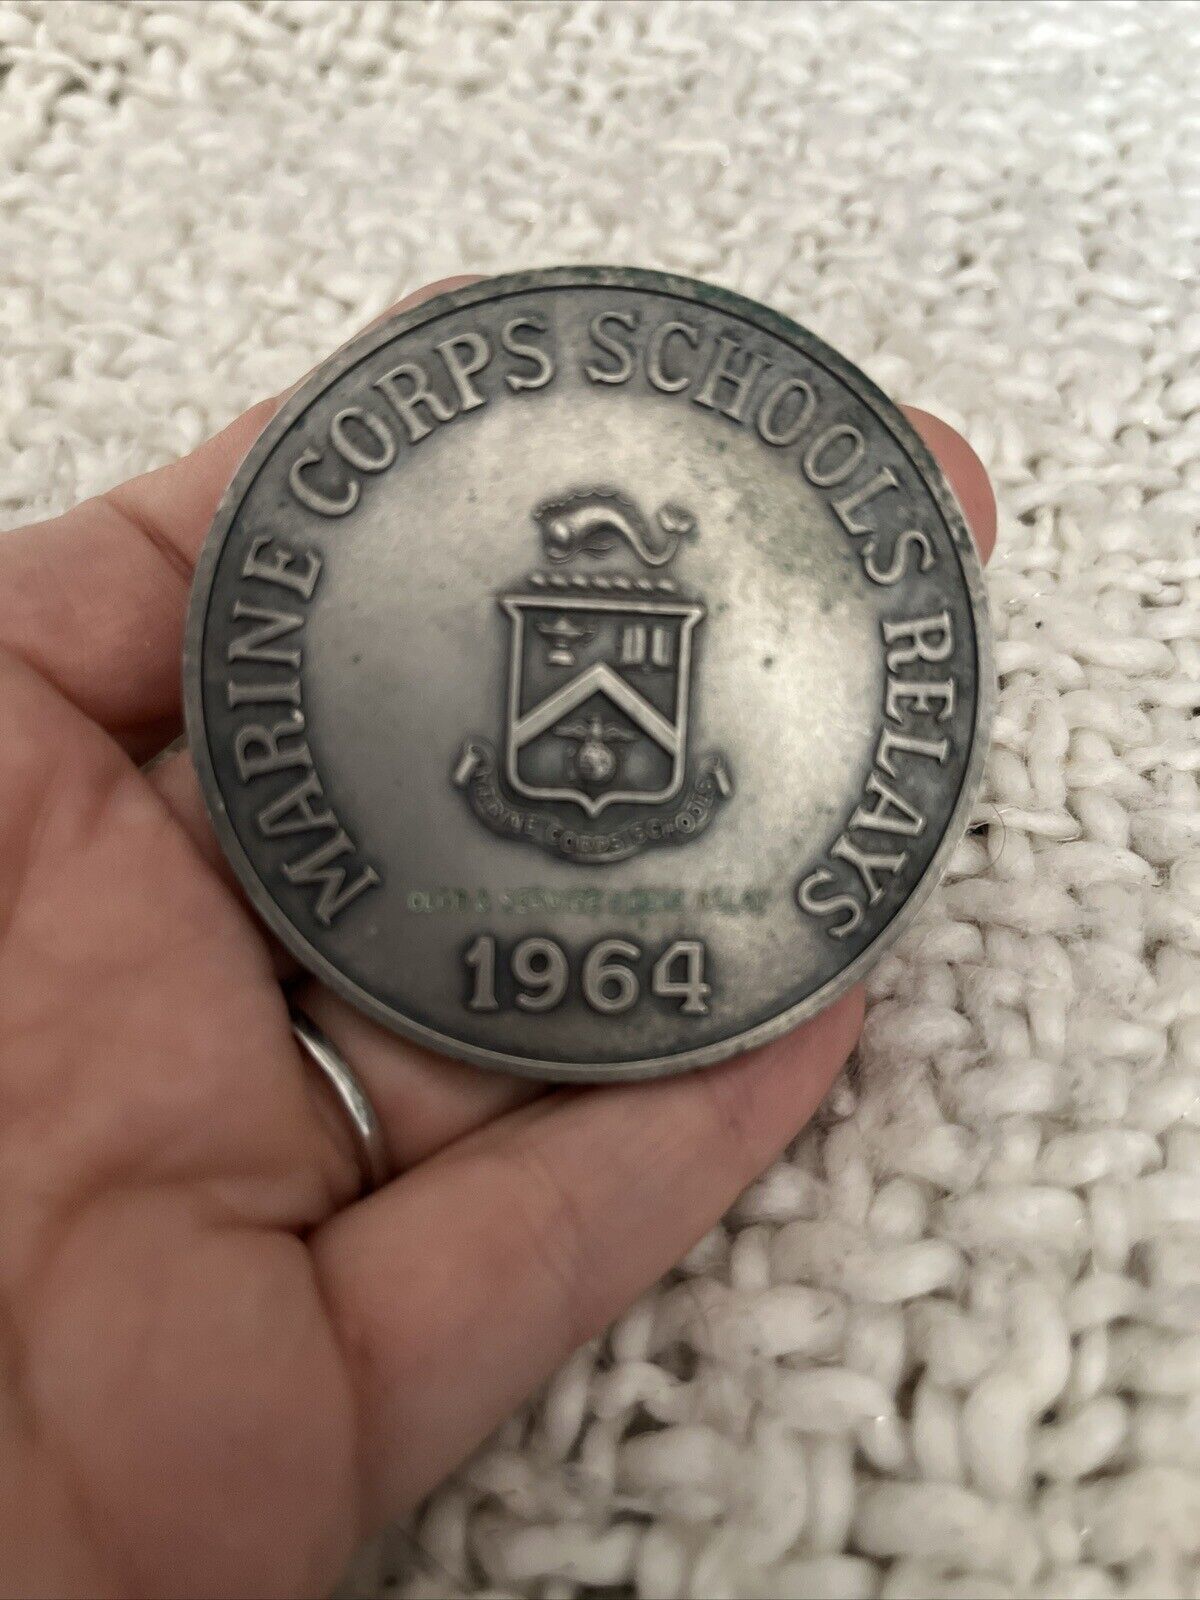 One of a kind- Rare Officials Award - USMC Schools Relays 1964 Marine Corp